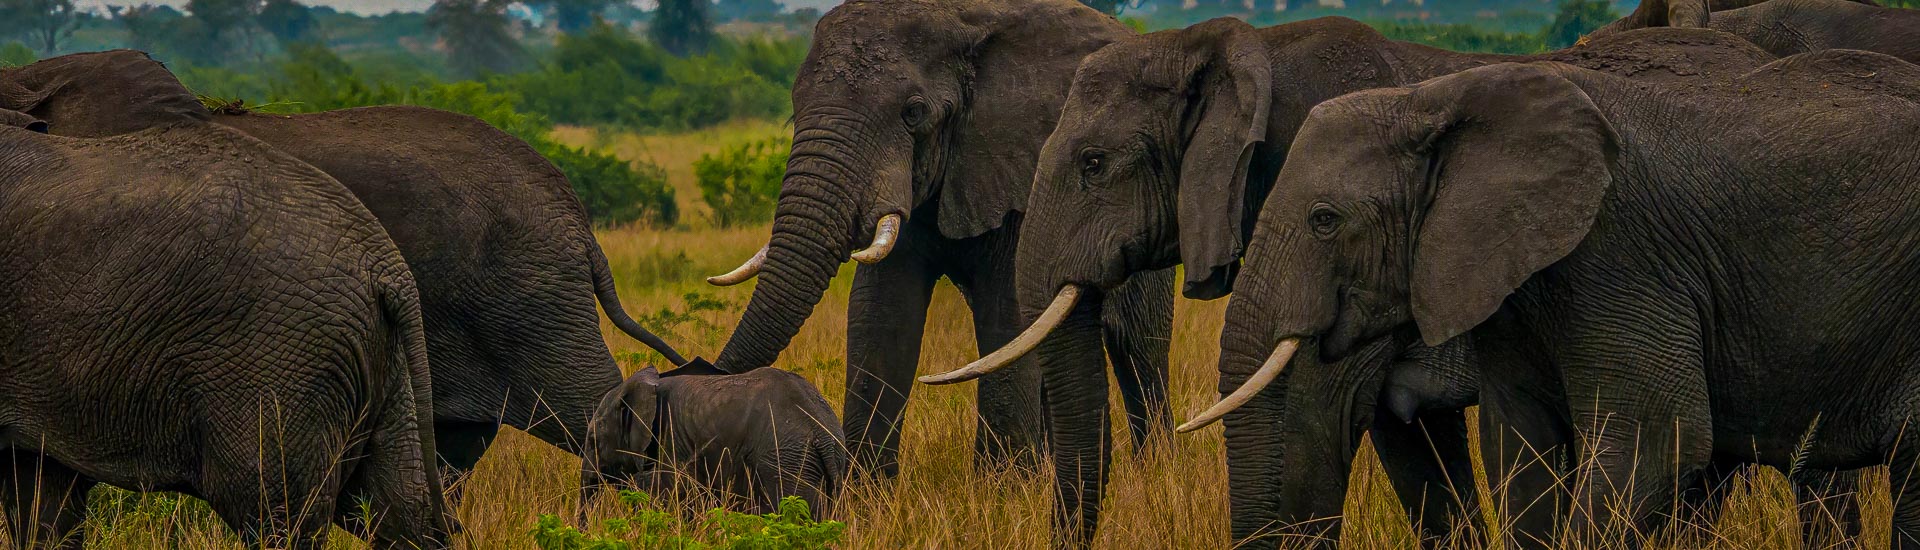 Elefantenfamilie Uganda Reise